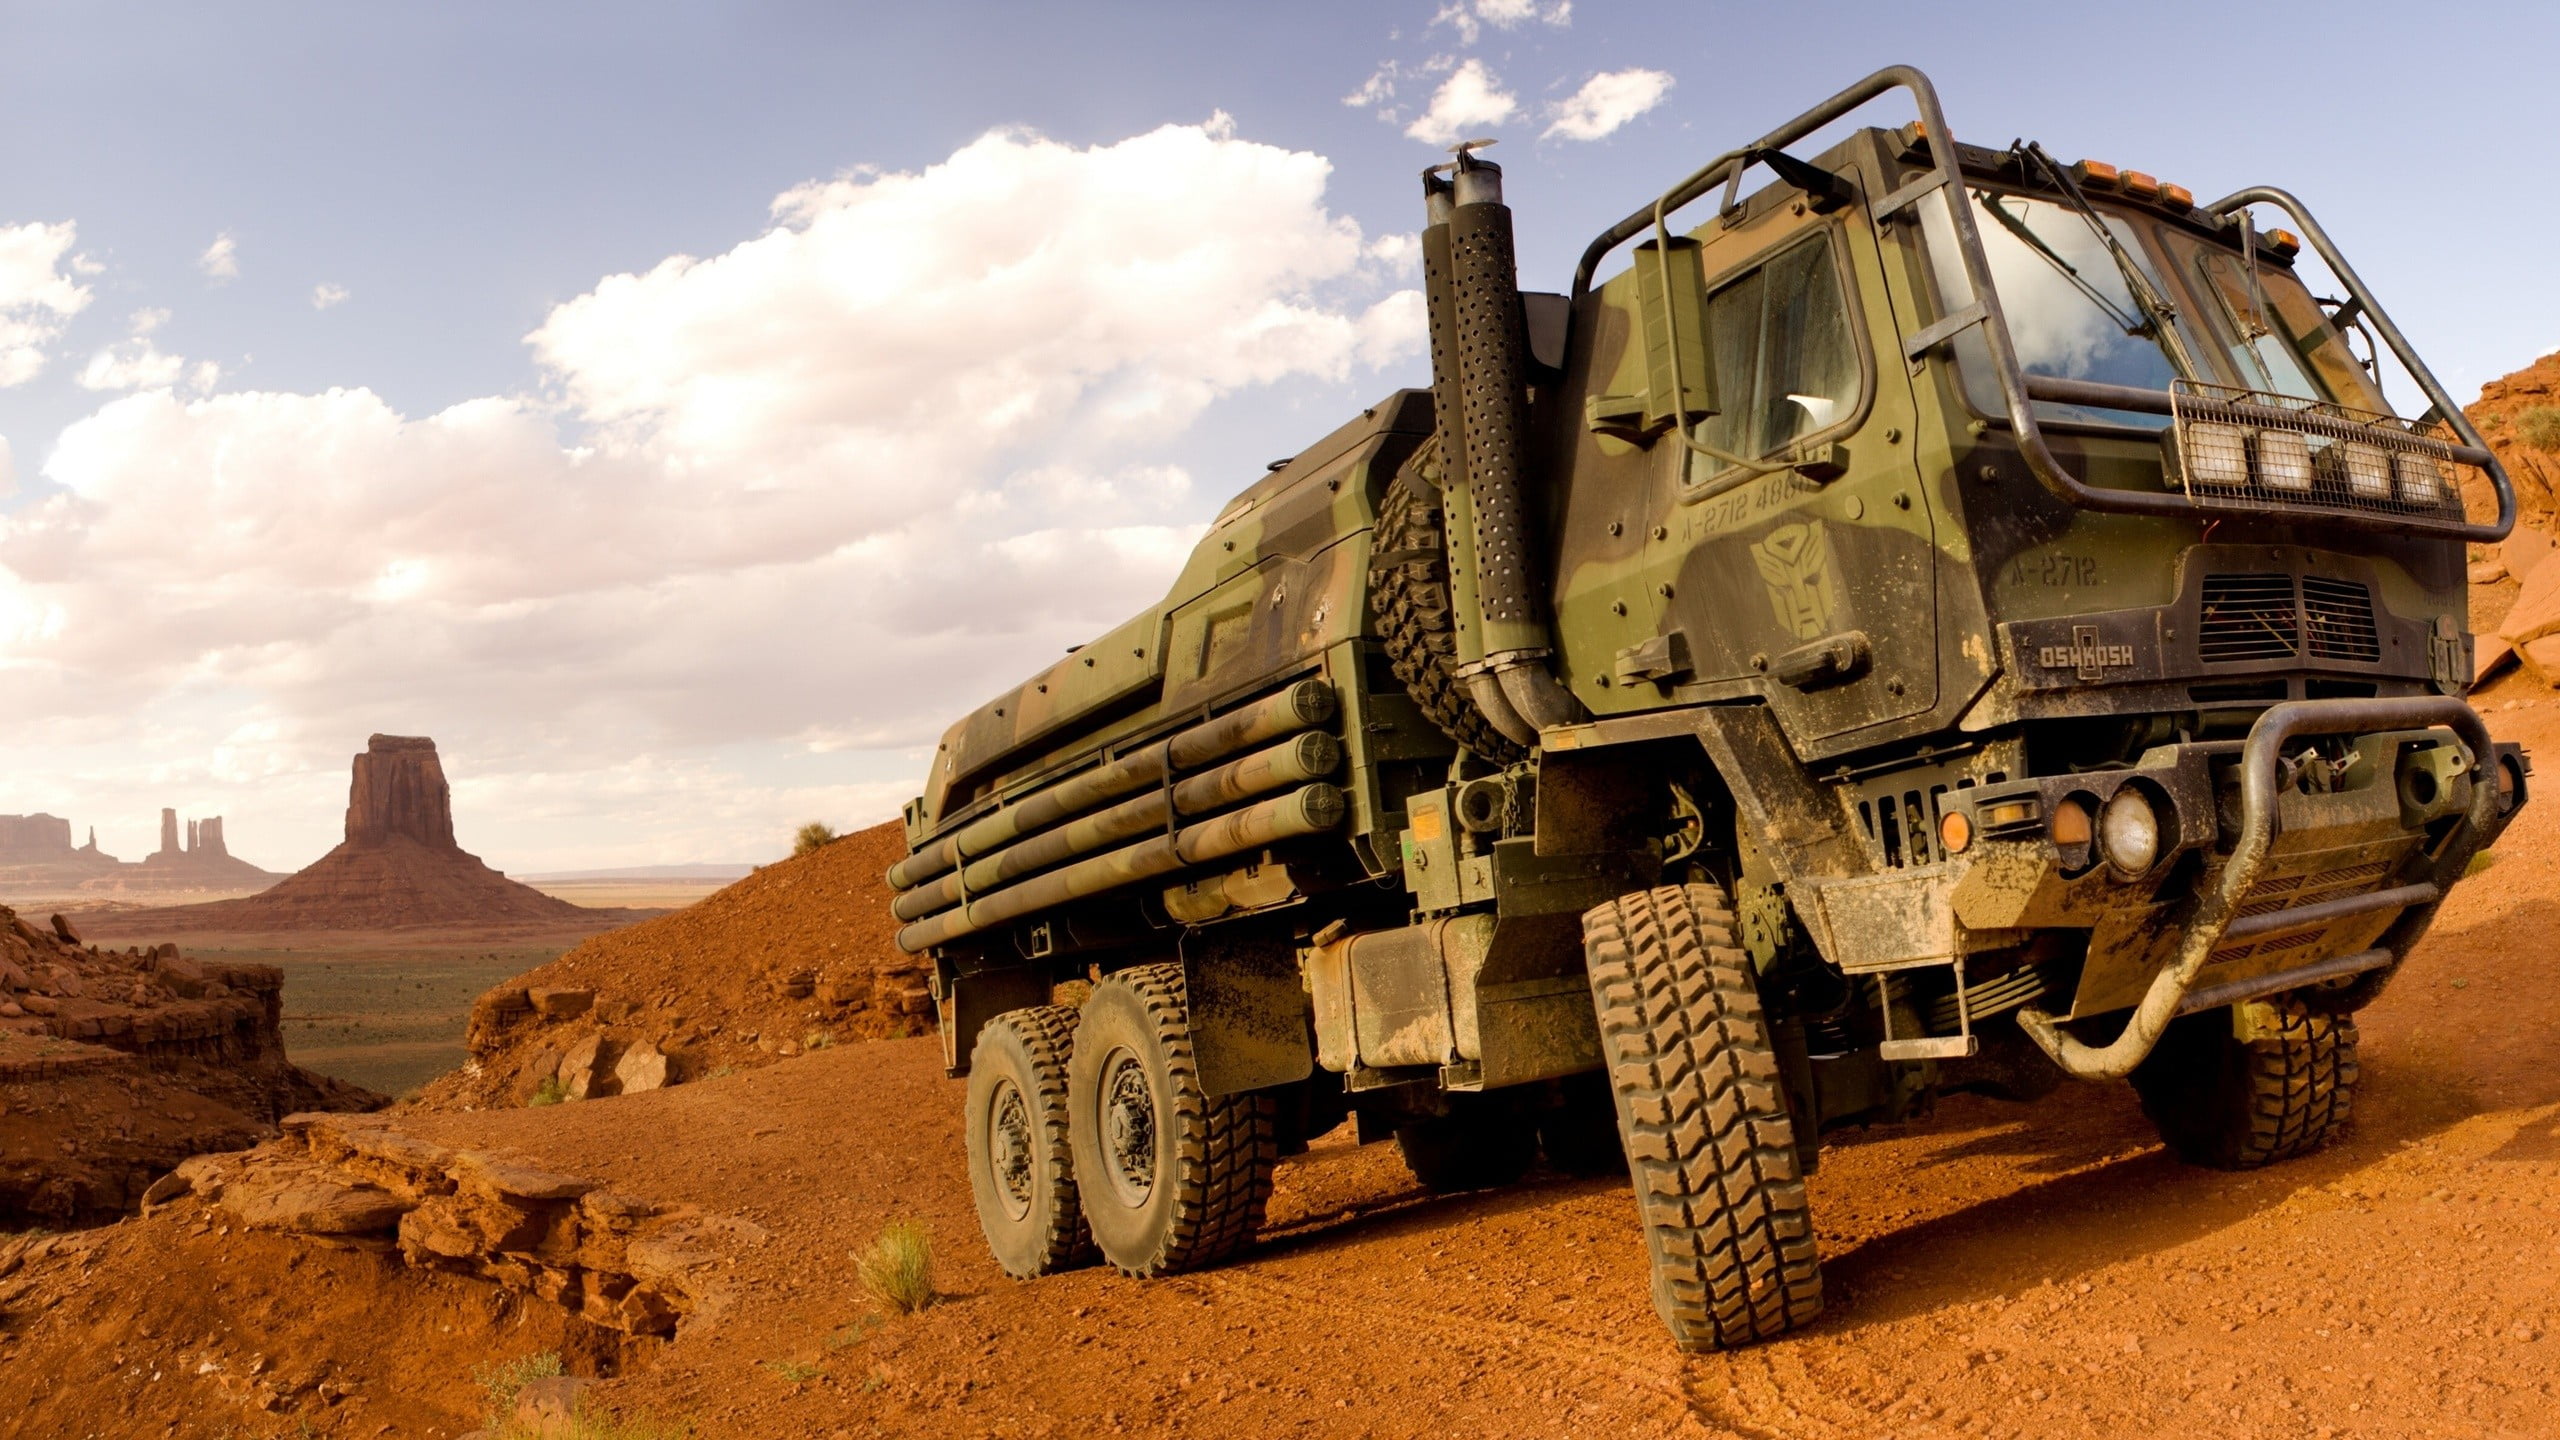 Green Desert Truck Army Transformers Vehicle Hd Wallpaper Wallpaper Flare